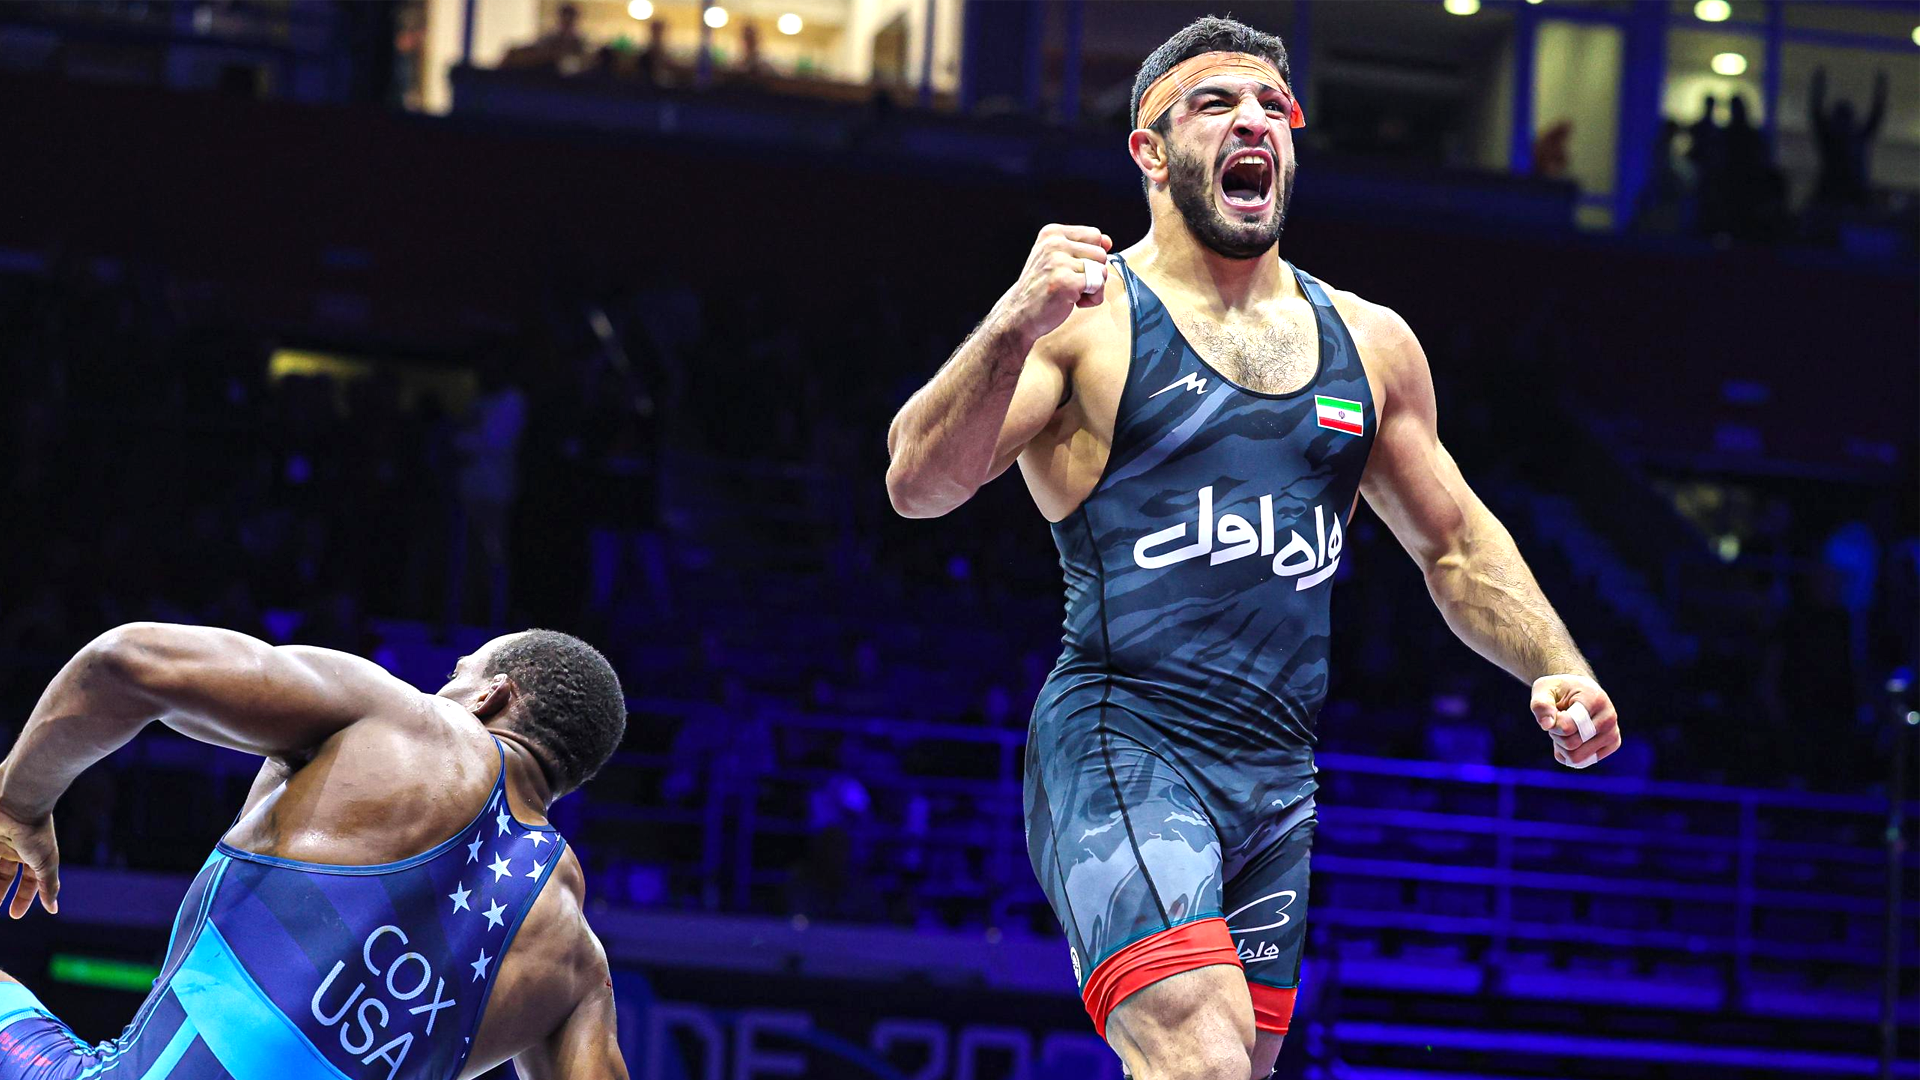 2022 Wrestling World Championship: Ghasempour gives Iran first gold medal at 92KG